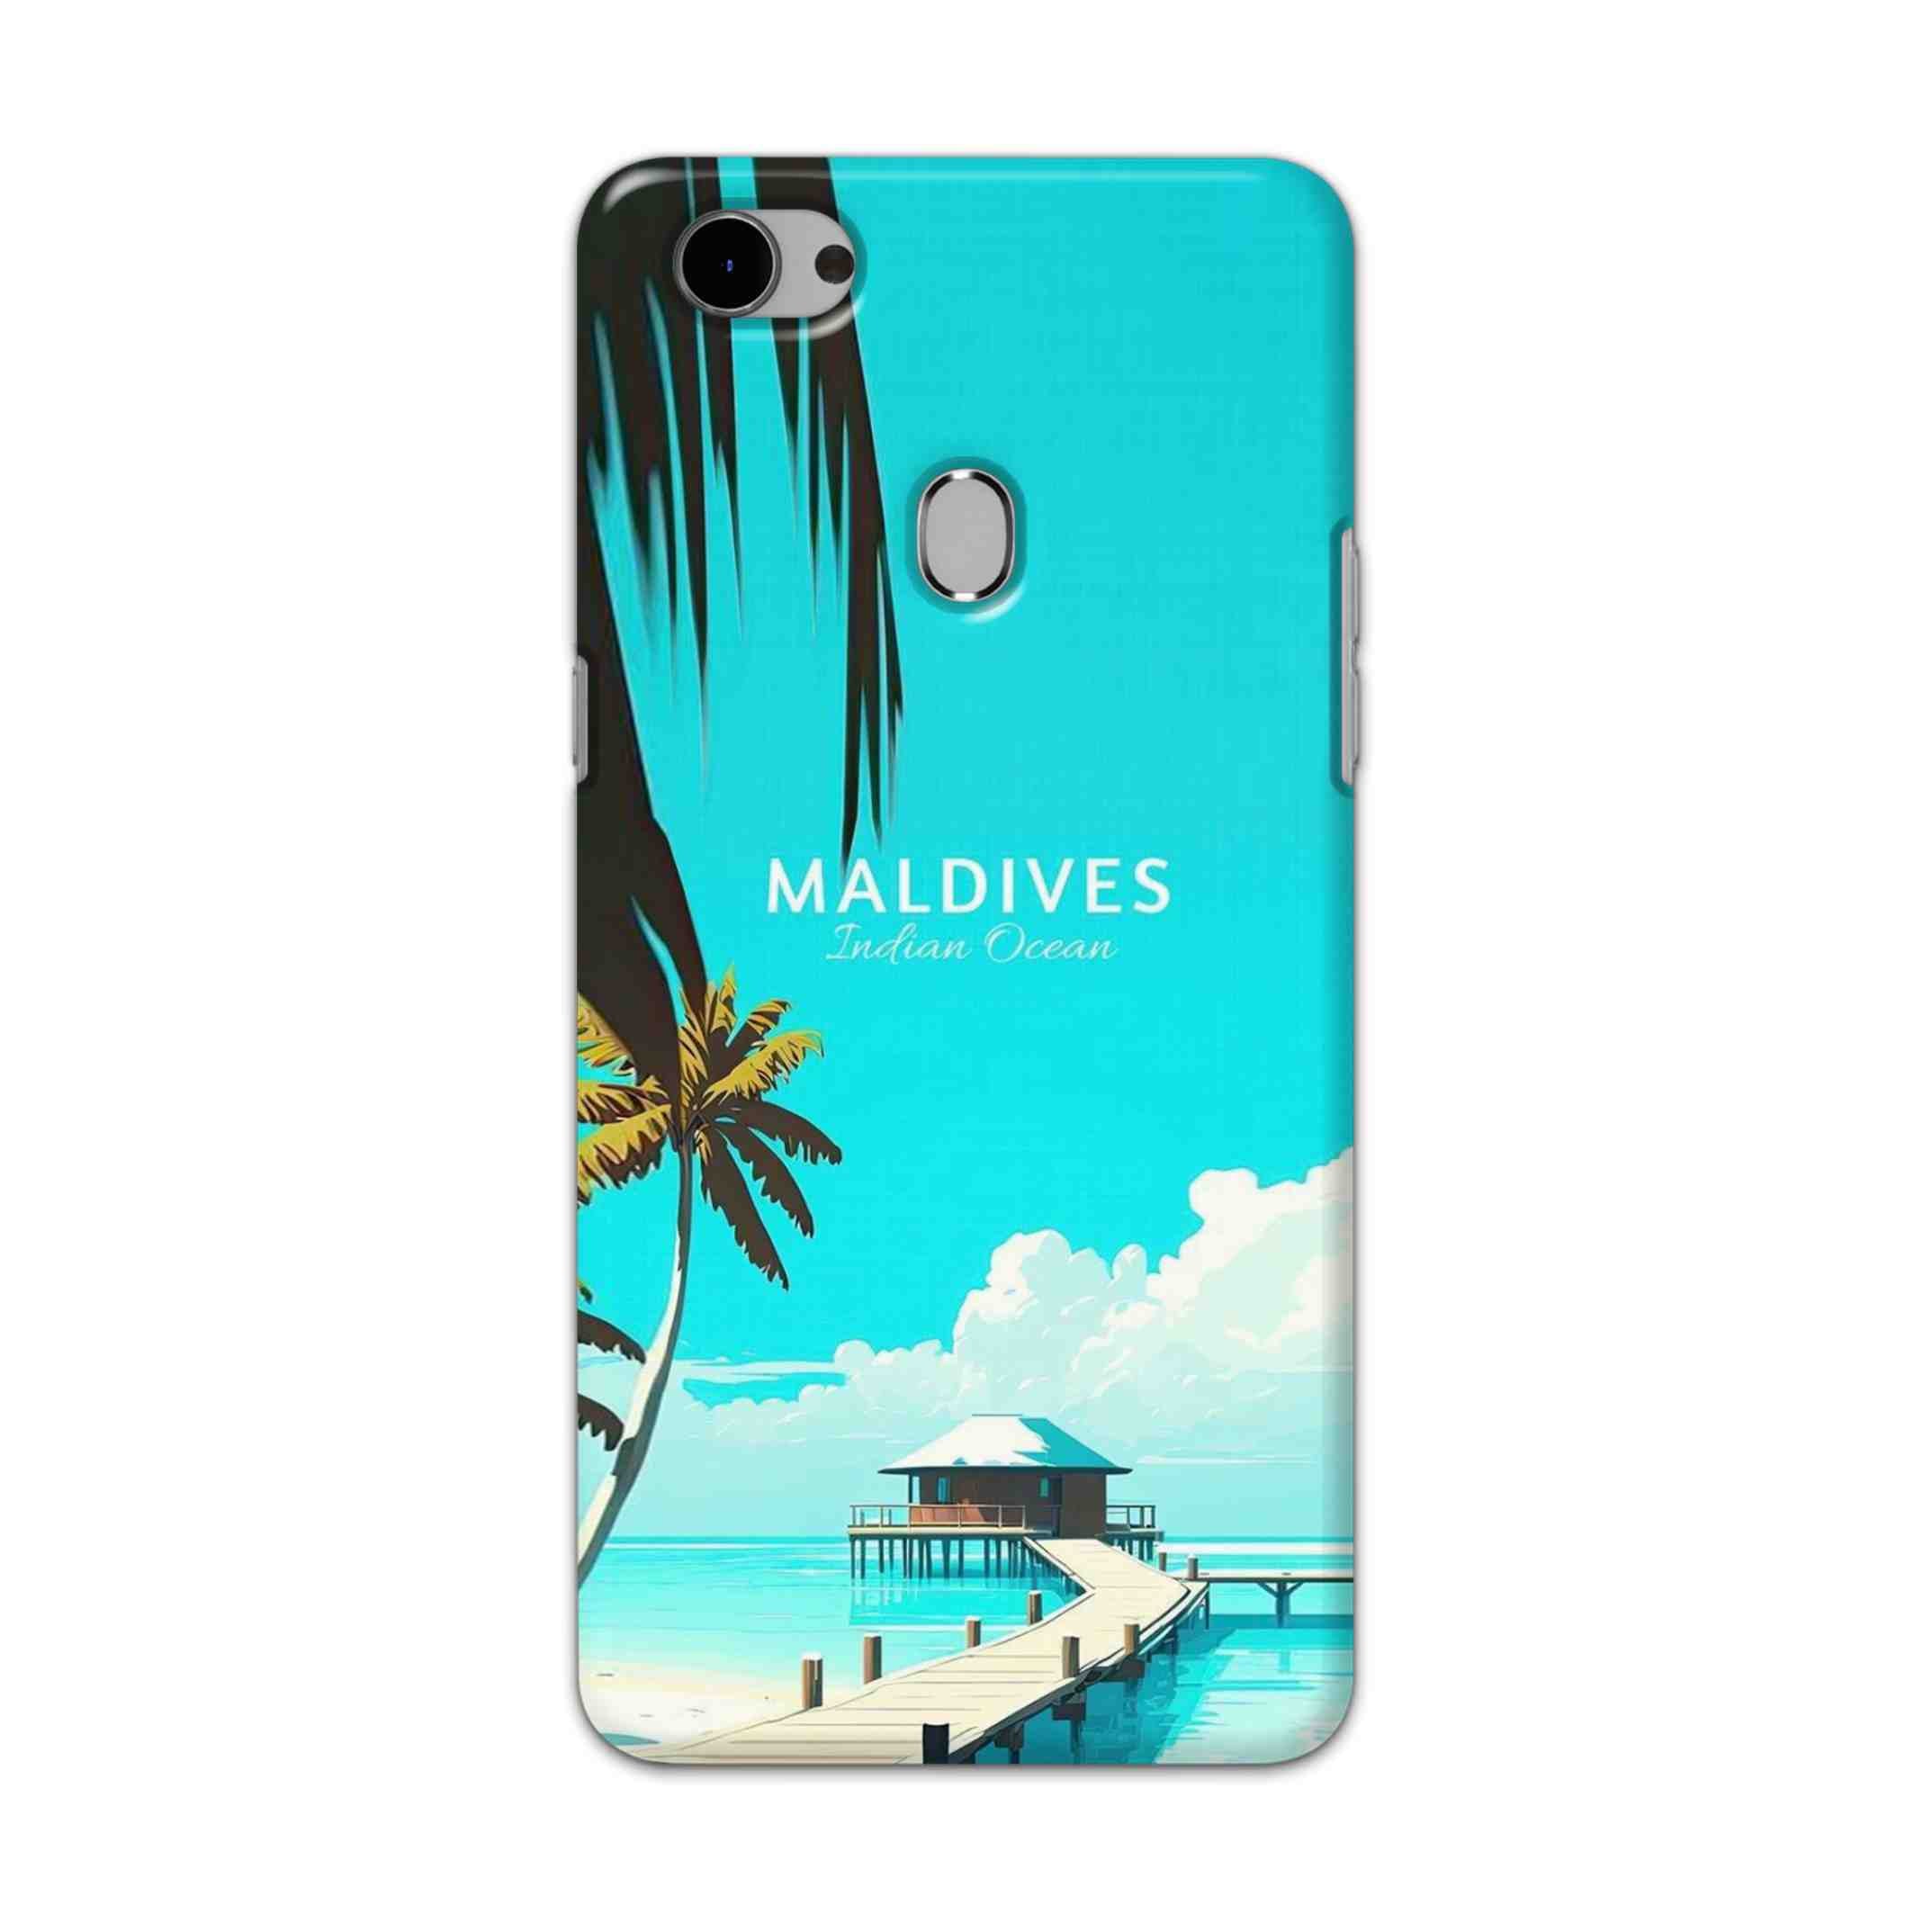 Buy Maldives Hard Back Mobile Phone Case Cover For Oppo F7 Online